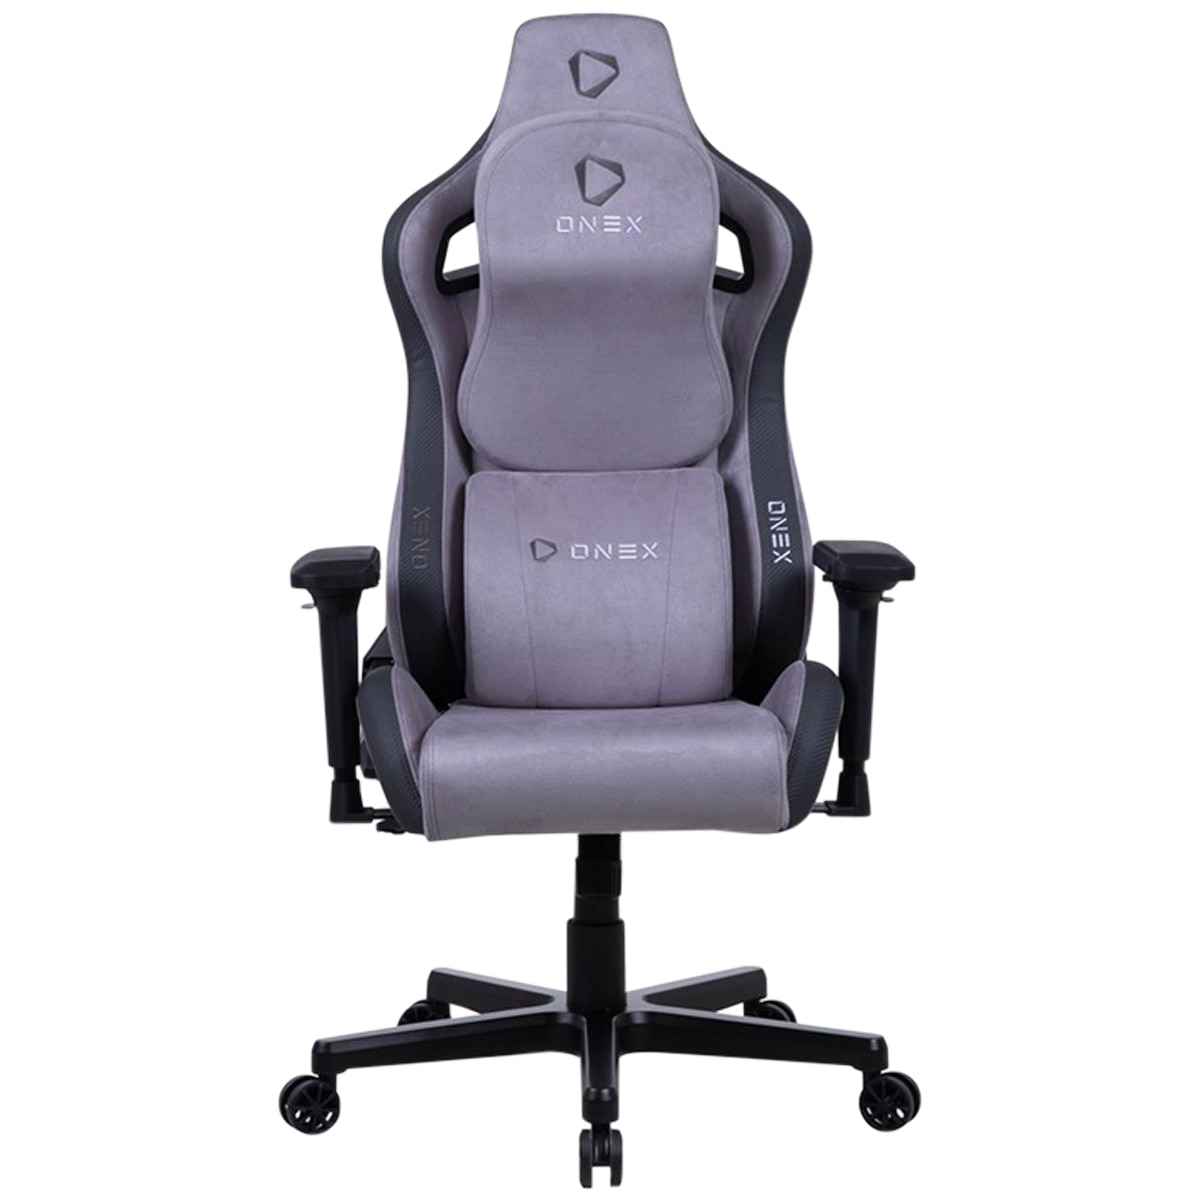 Onex Ev10 Evolution Edition Gaming Chair Suede Costco Australia